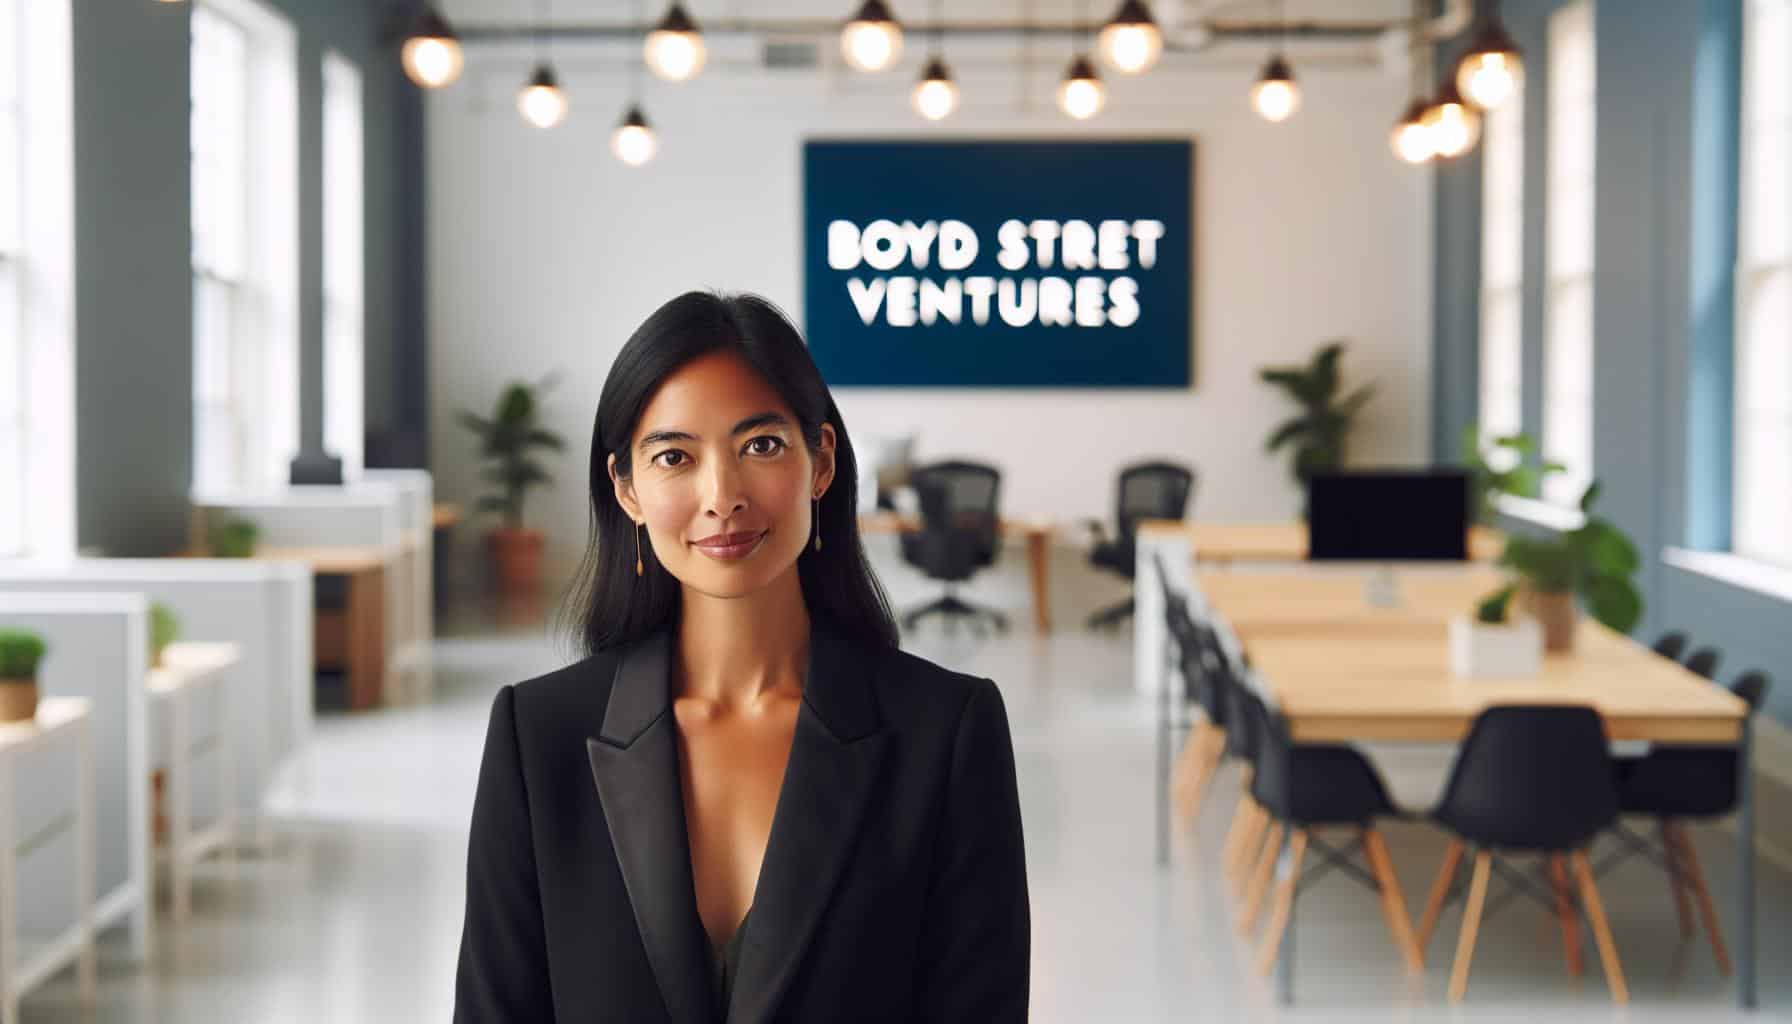 Meghna Vaidyanath Joins Boyd Street Ventures as Venture Studio Manager | FinOracle